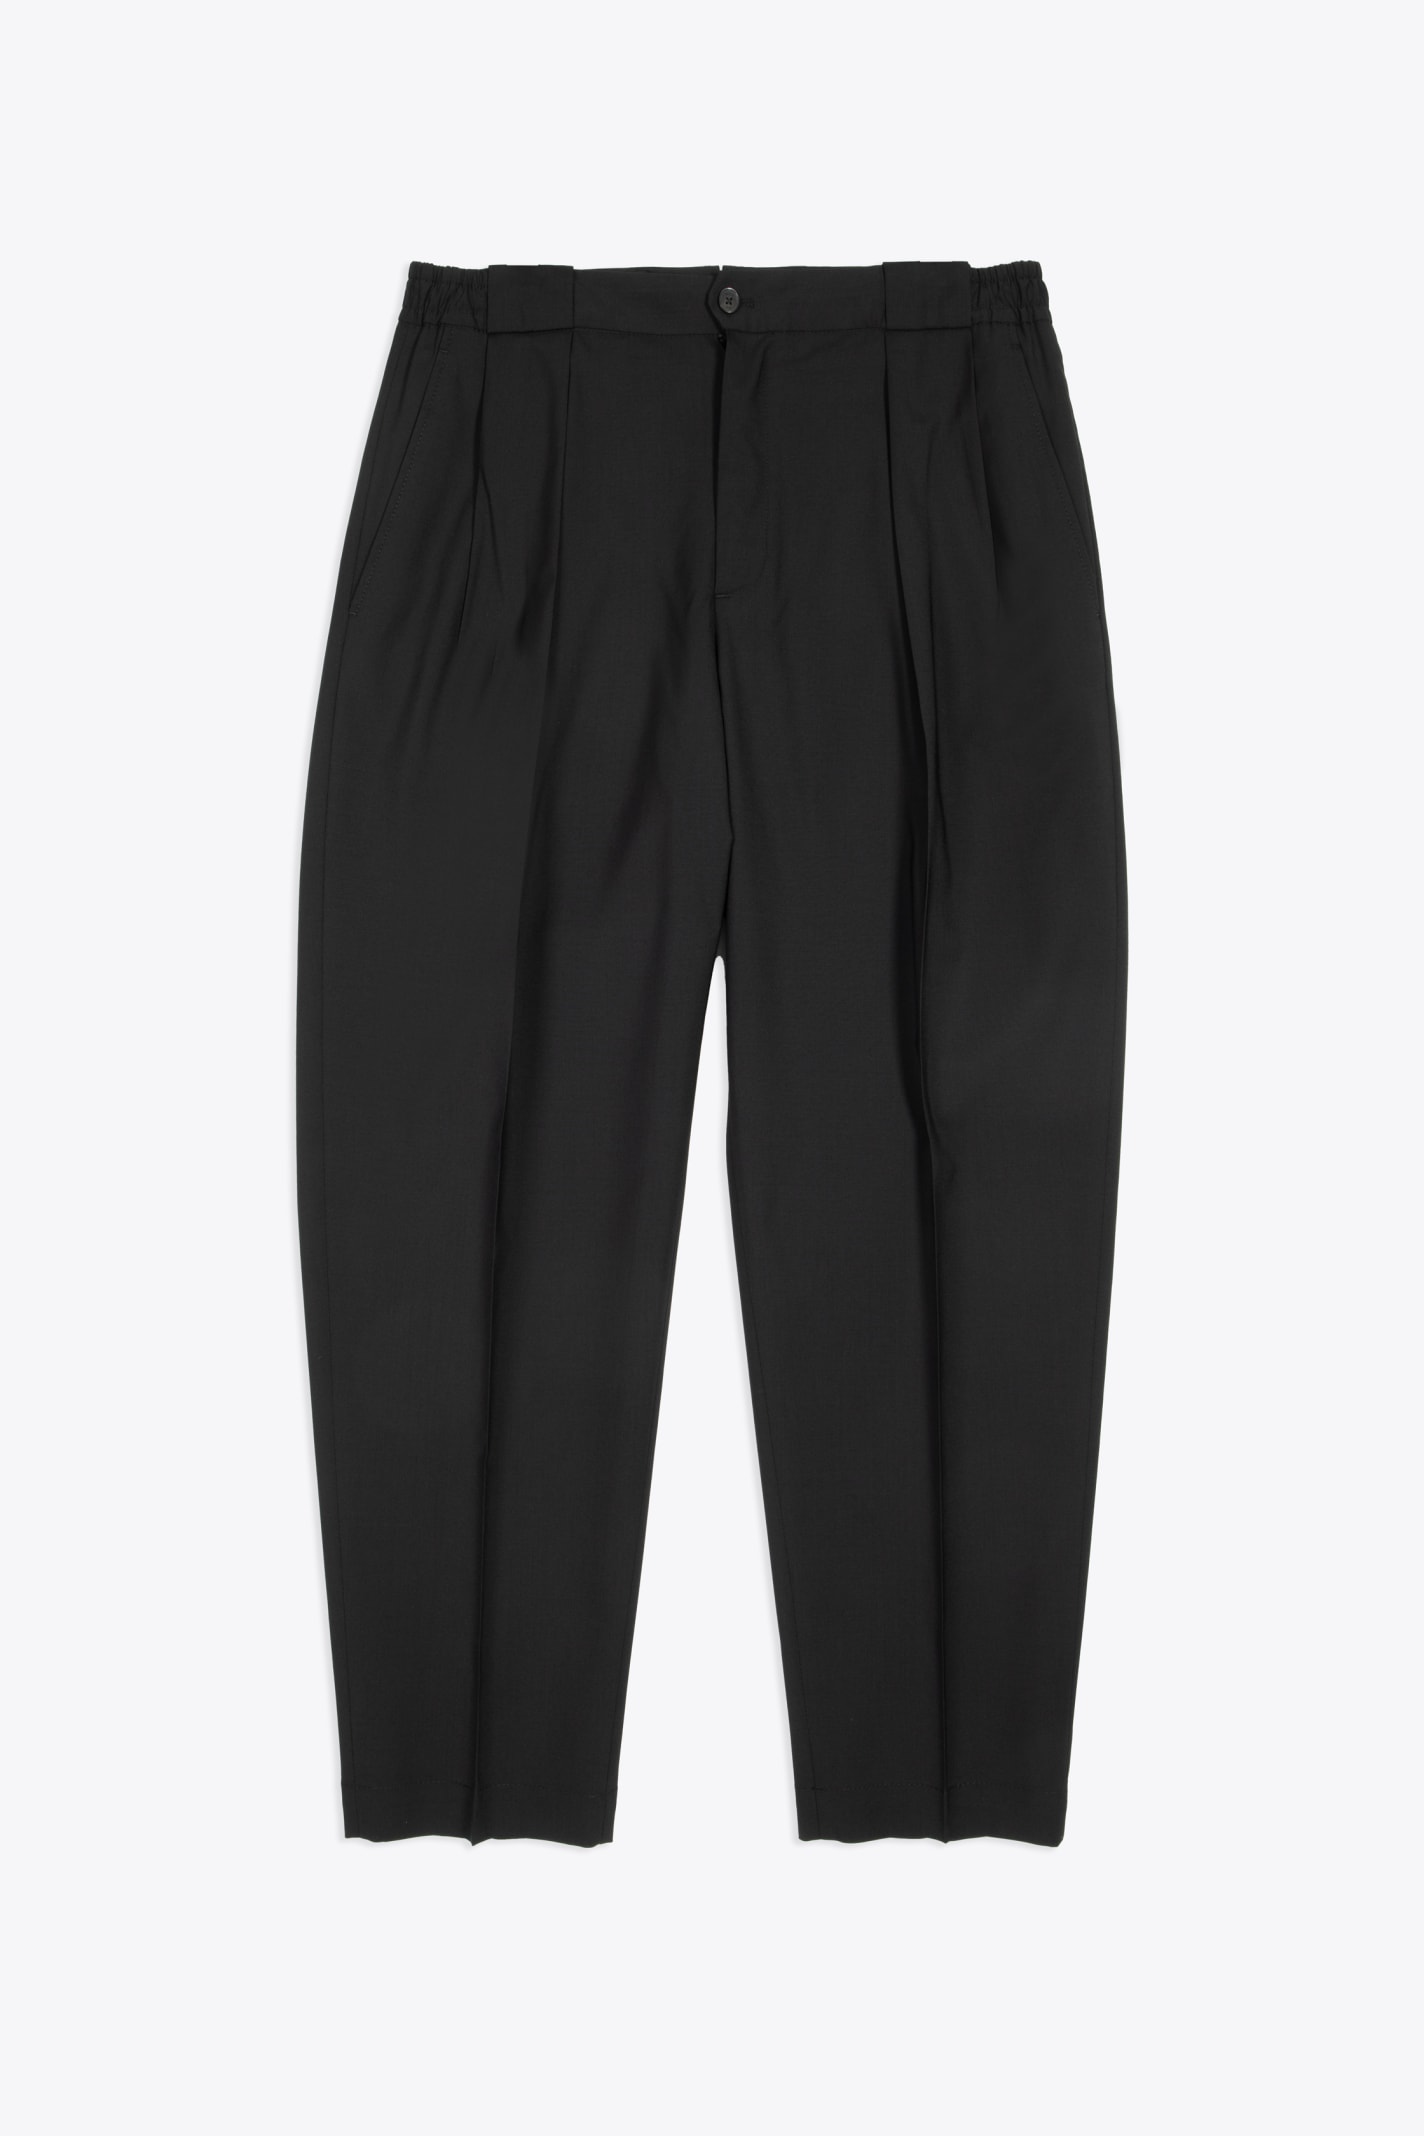 Pantalone Black tailored wool pleated cropped pant - Portobellos